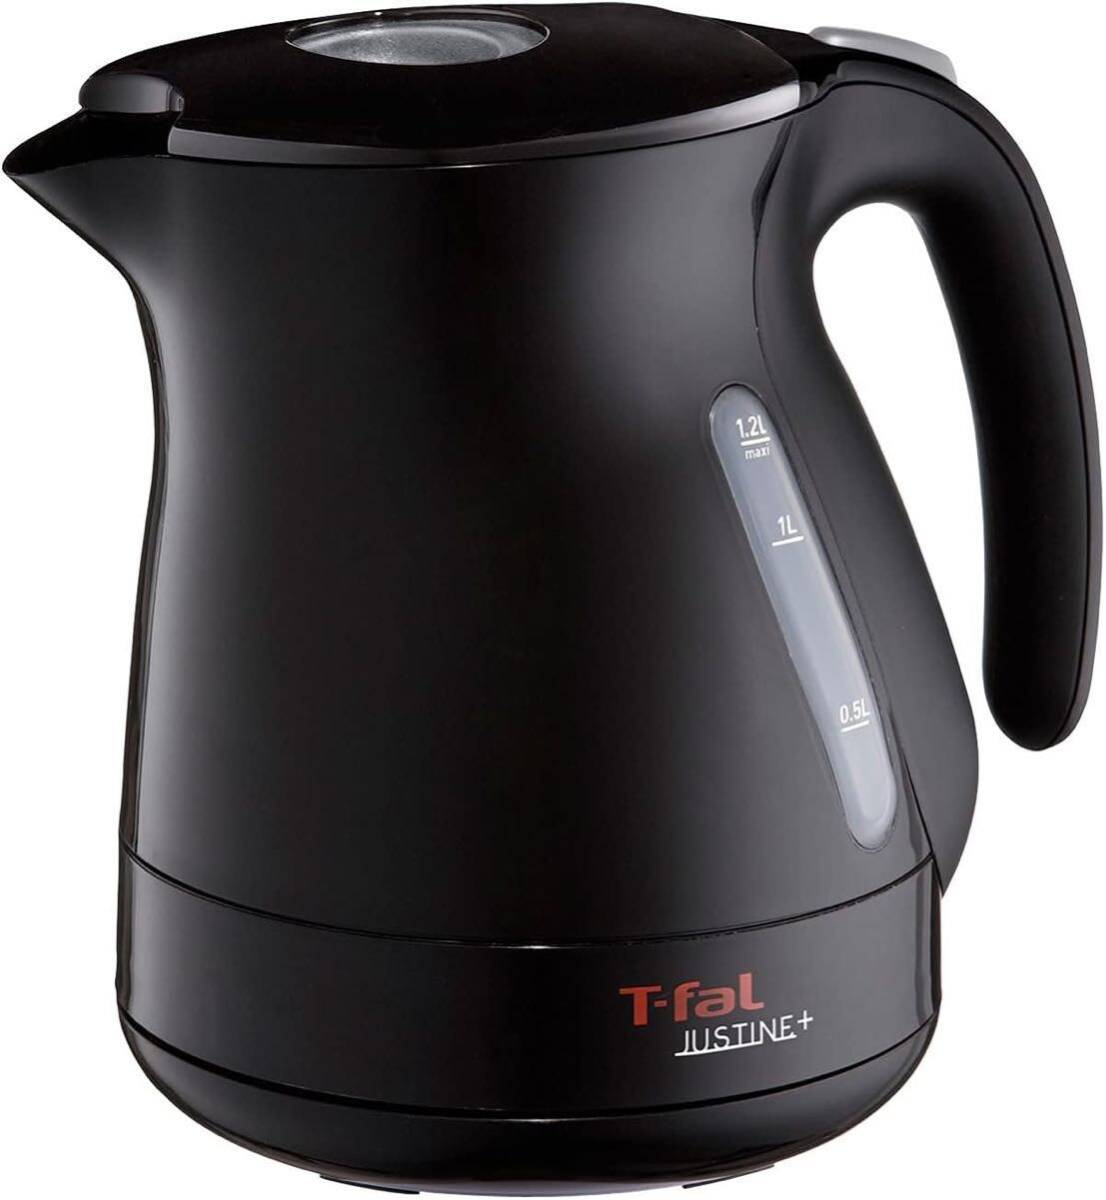 ti fur ru electric kettle [kakao black ]ti fur ruT-FAL electric kettle Justin plus 1.2L KO3408JP cordless [ free shipping ]